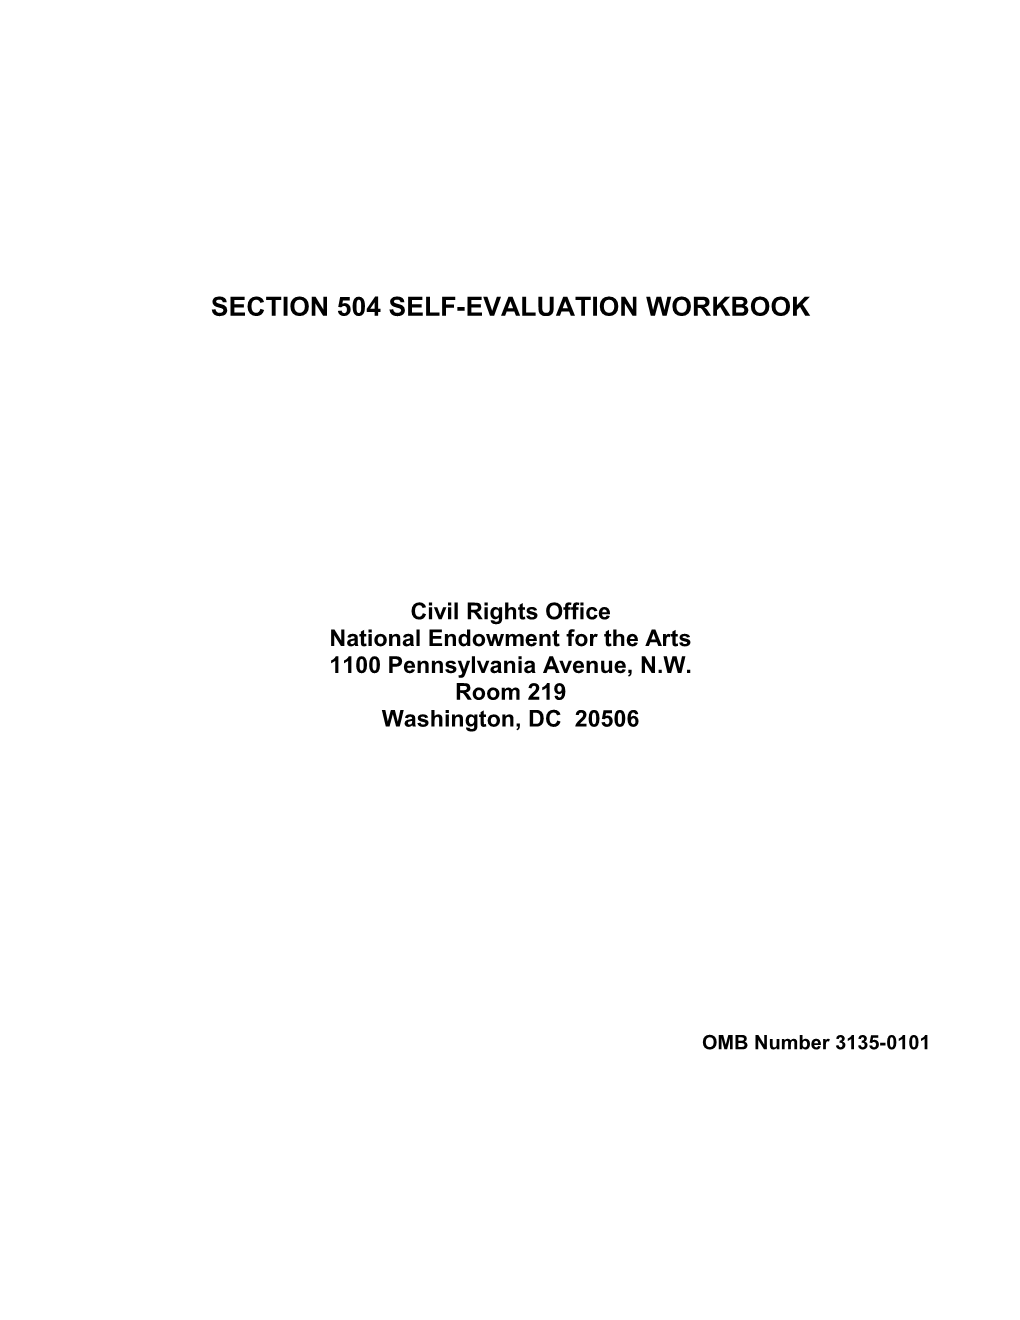 Section 504 Self-Evaluation Workbook